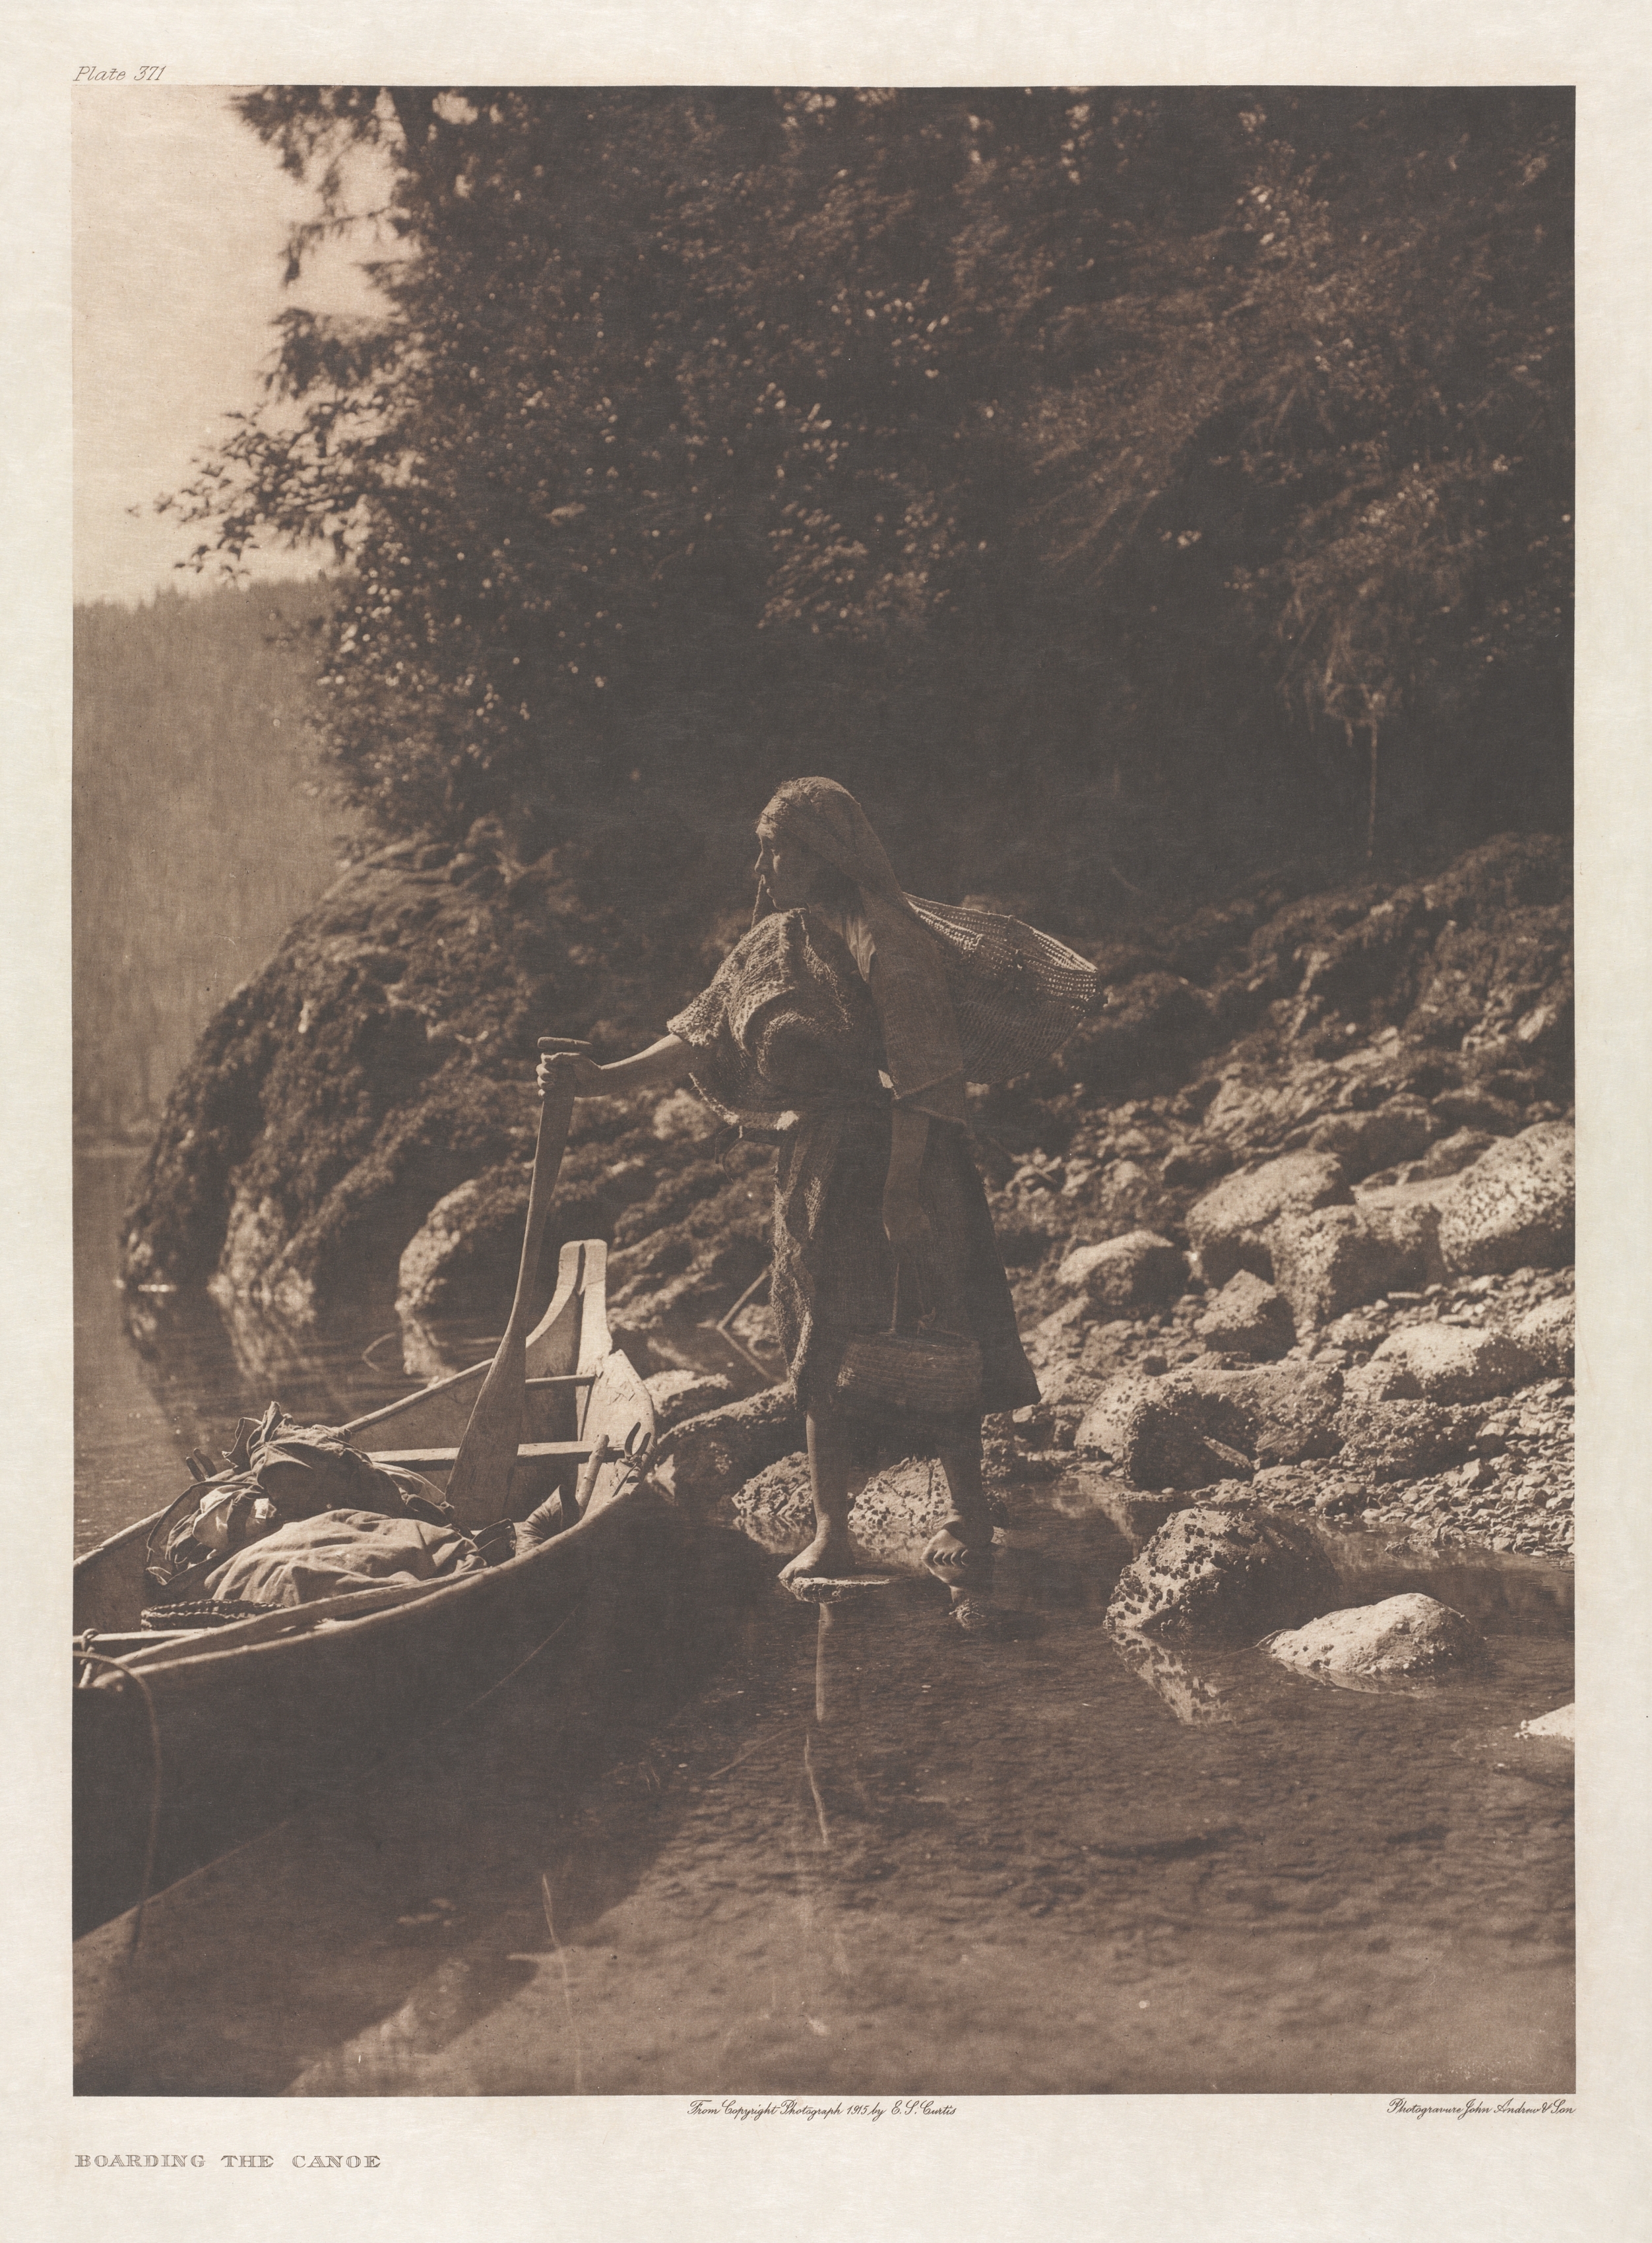 Portfolio XI, Plate 371: Boarding the Canoe